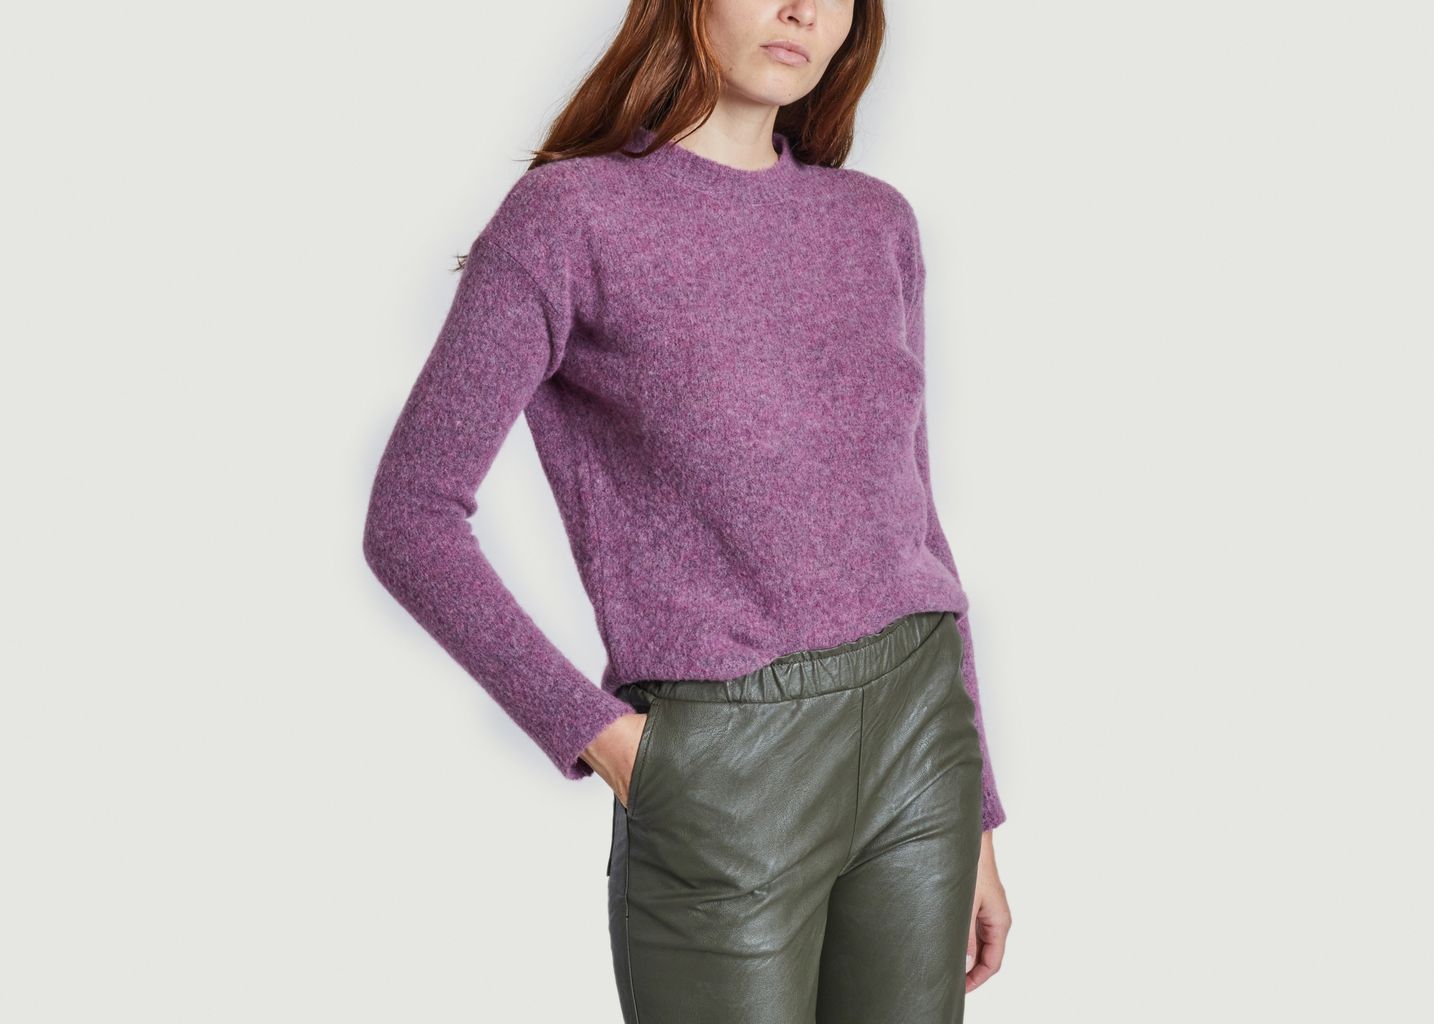 Sweater venus - Maevy